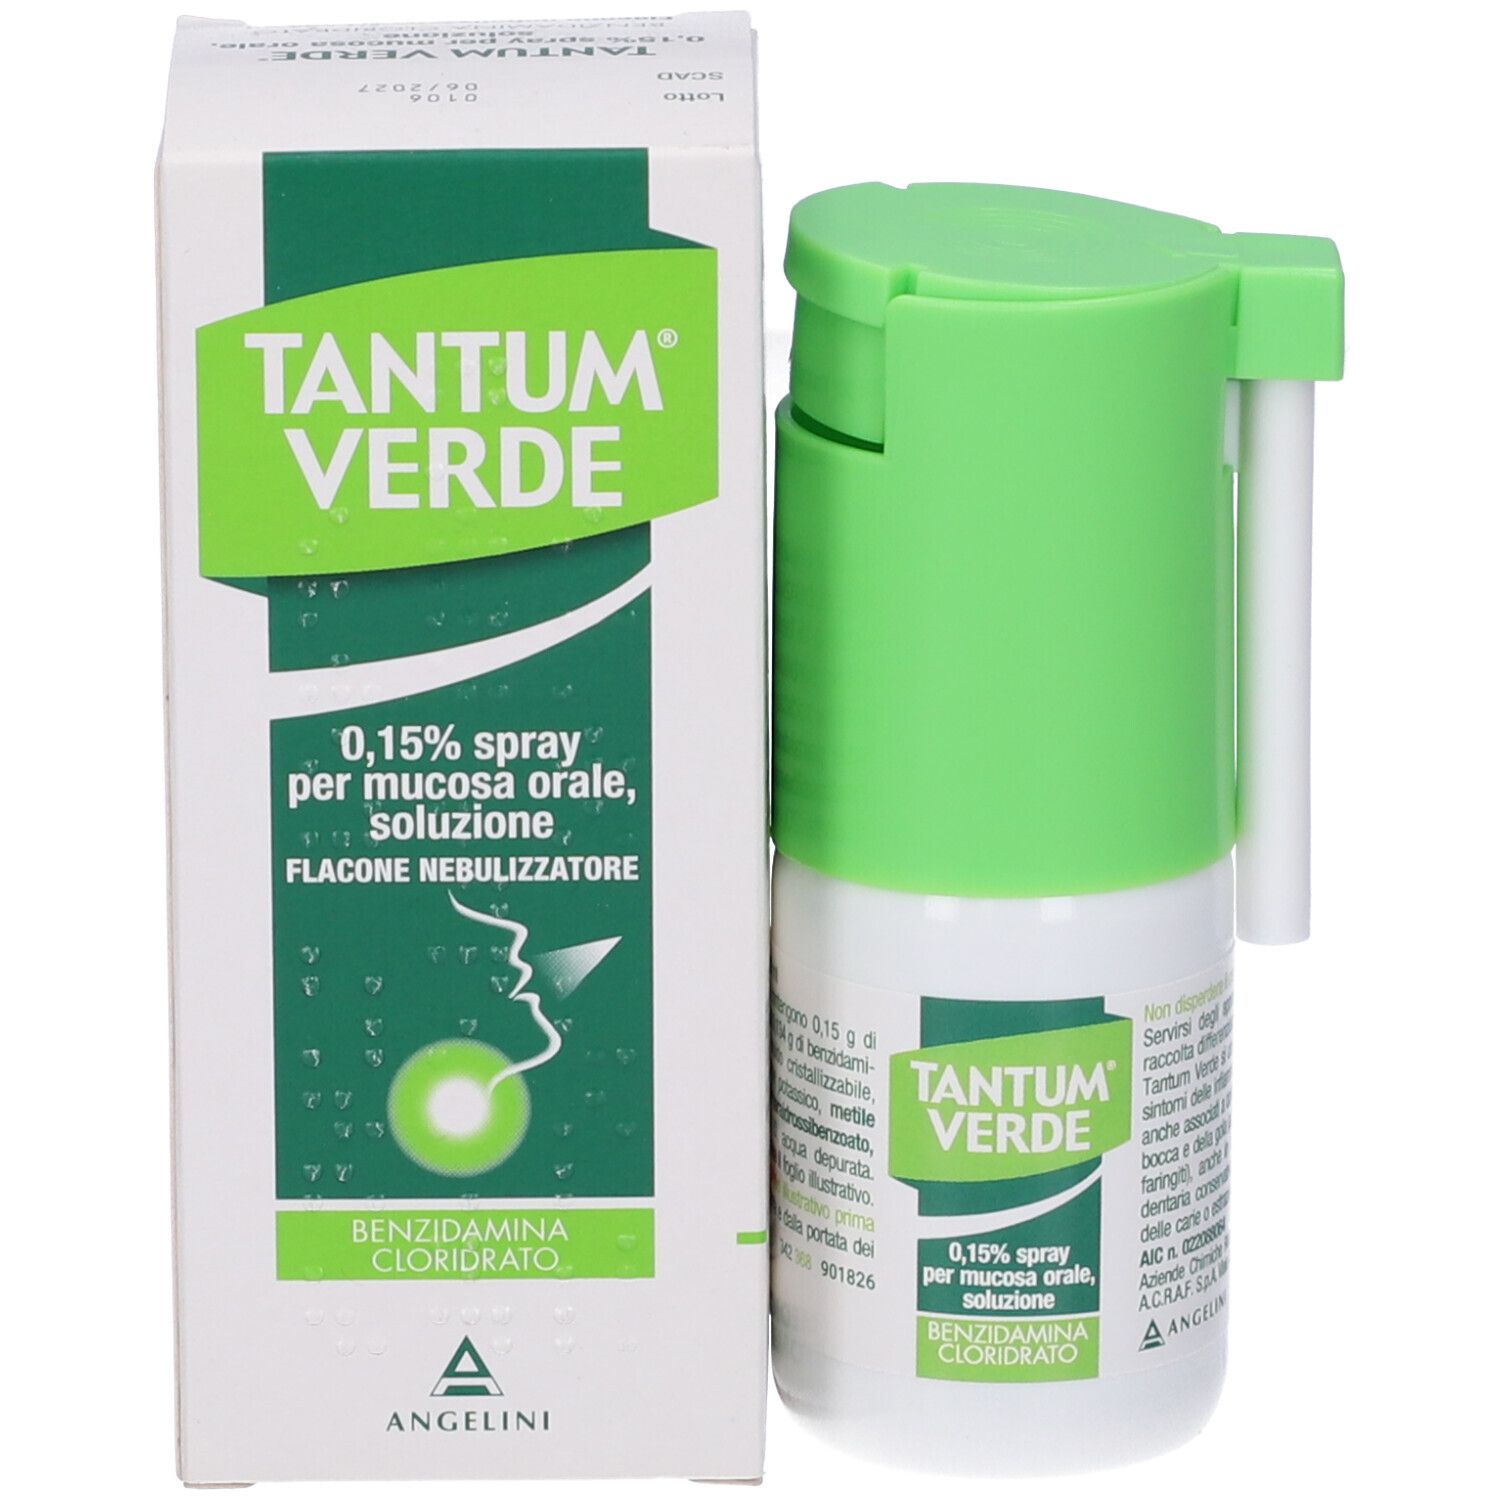 TANTUM® VERDE Spray 0,15%